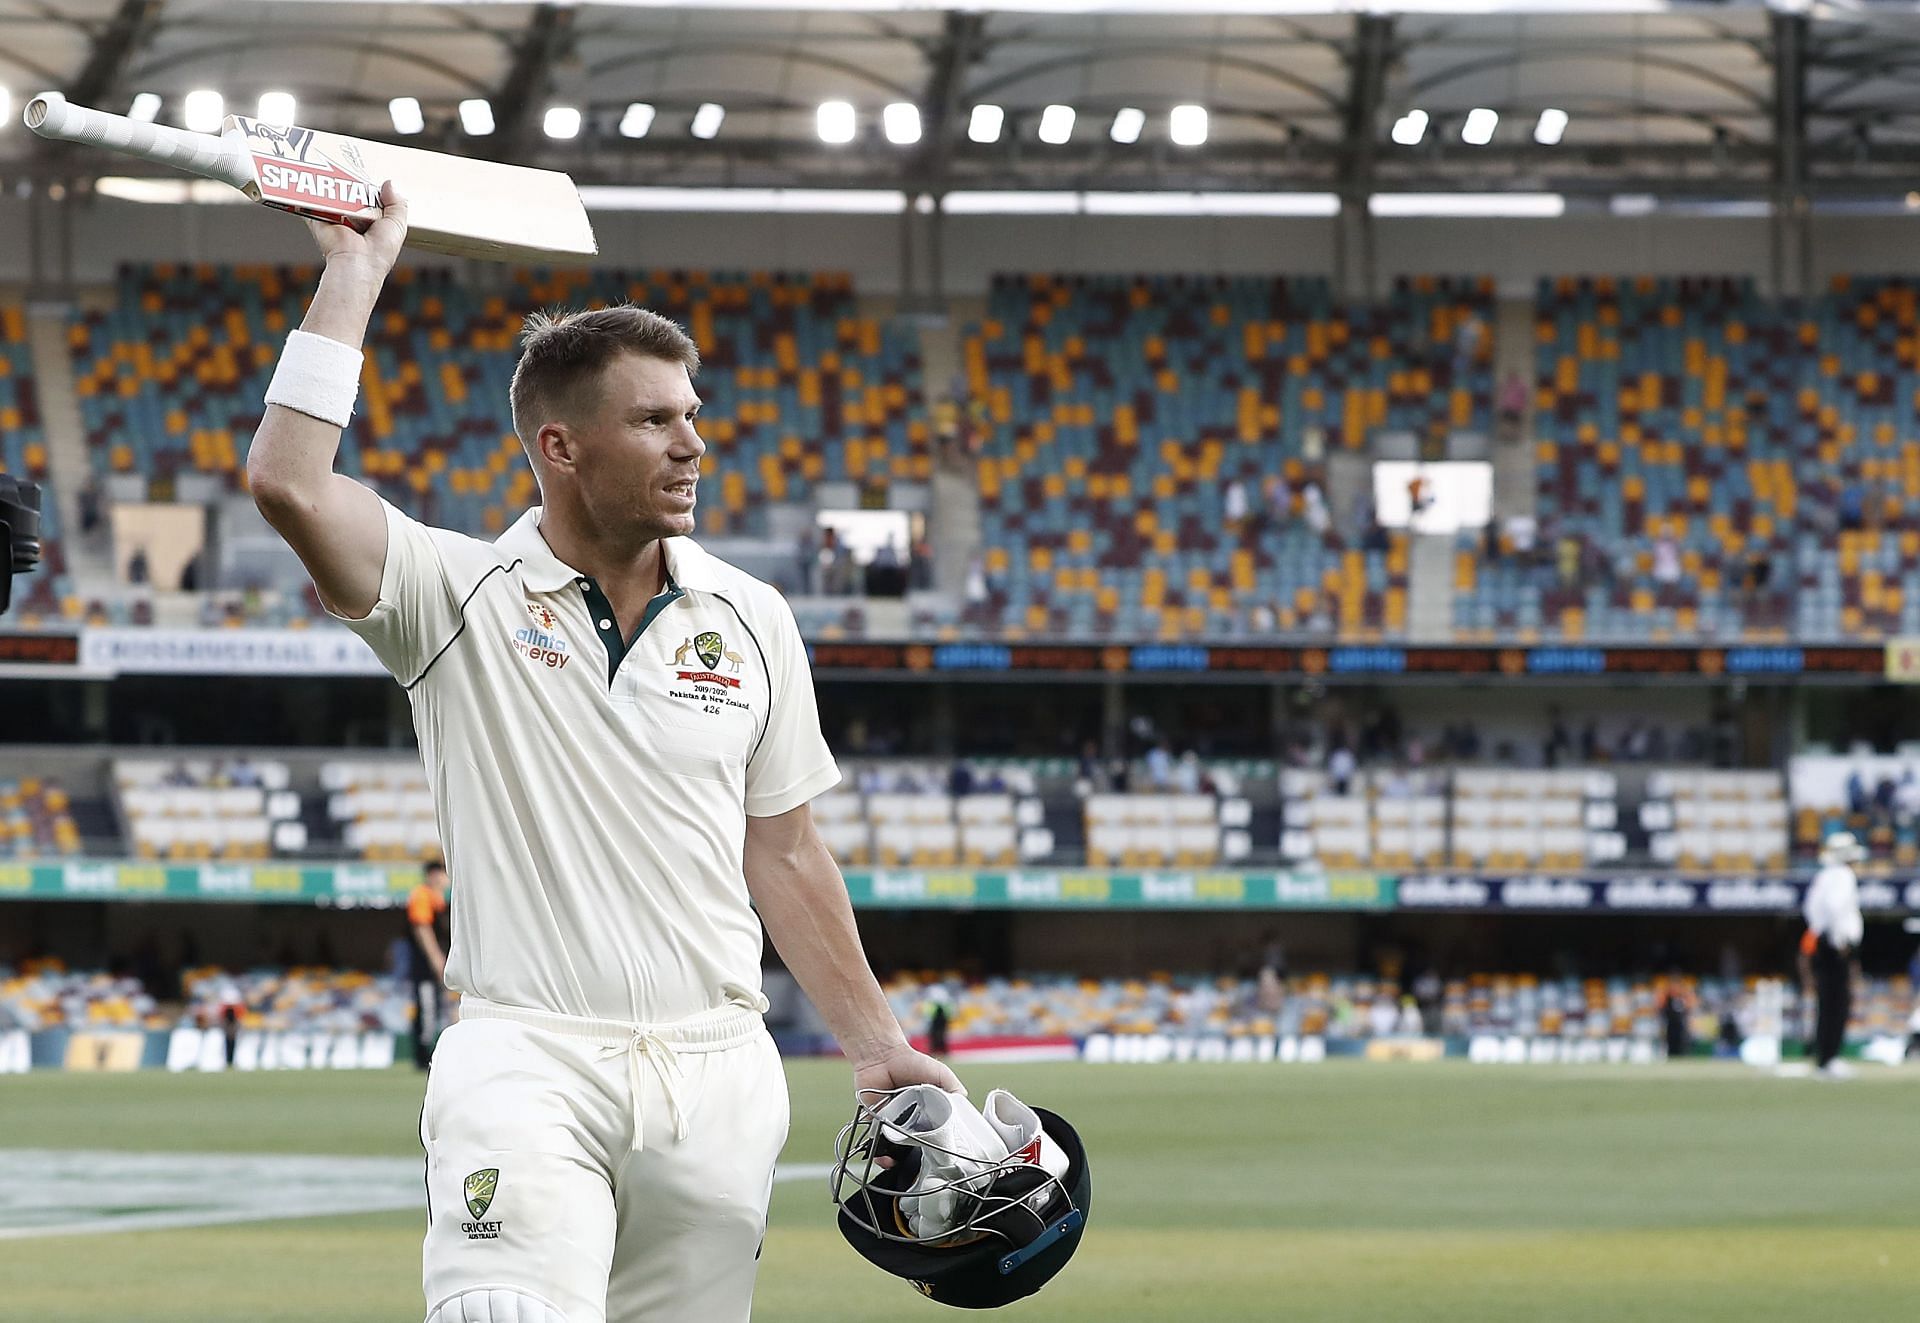 5 underrated David Warner knocks in Test cricket